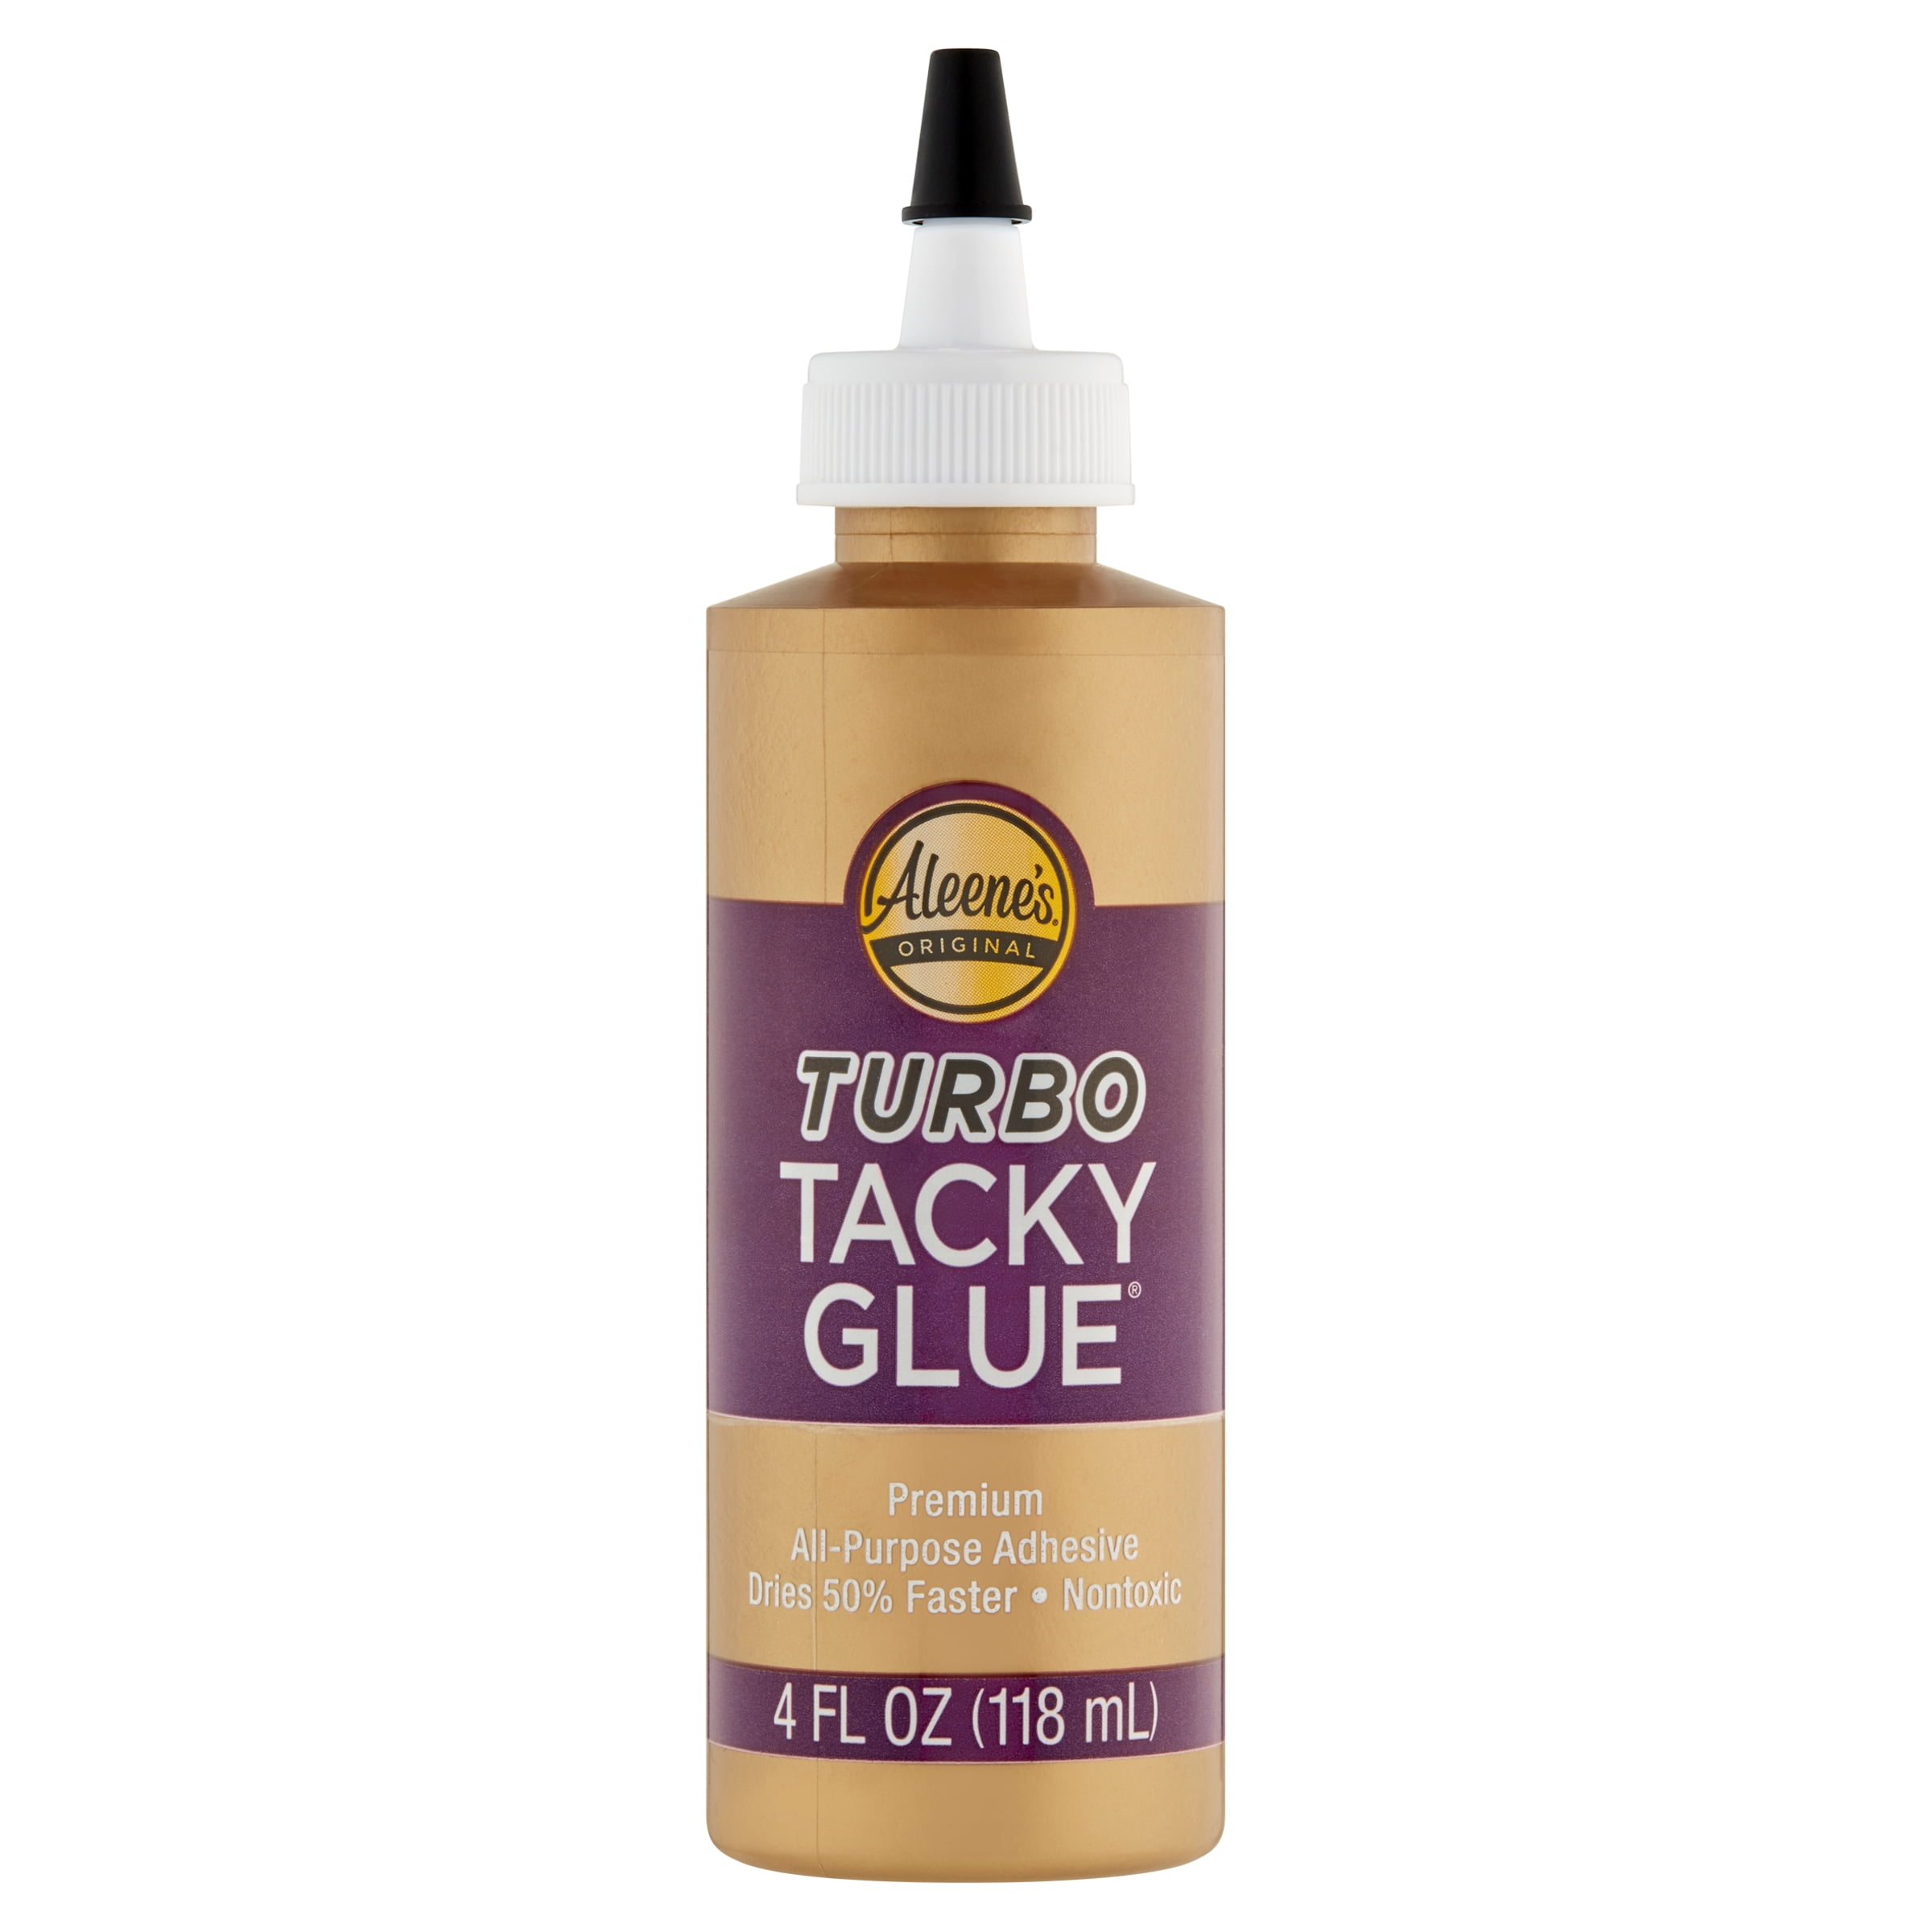 Aleene's Tack-It Over & Over Liquid Glue 4 oz